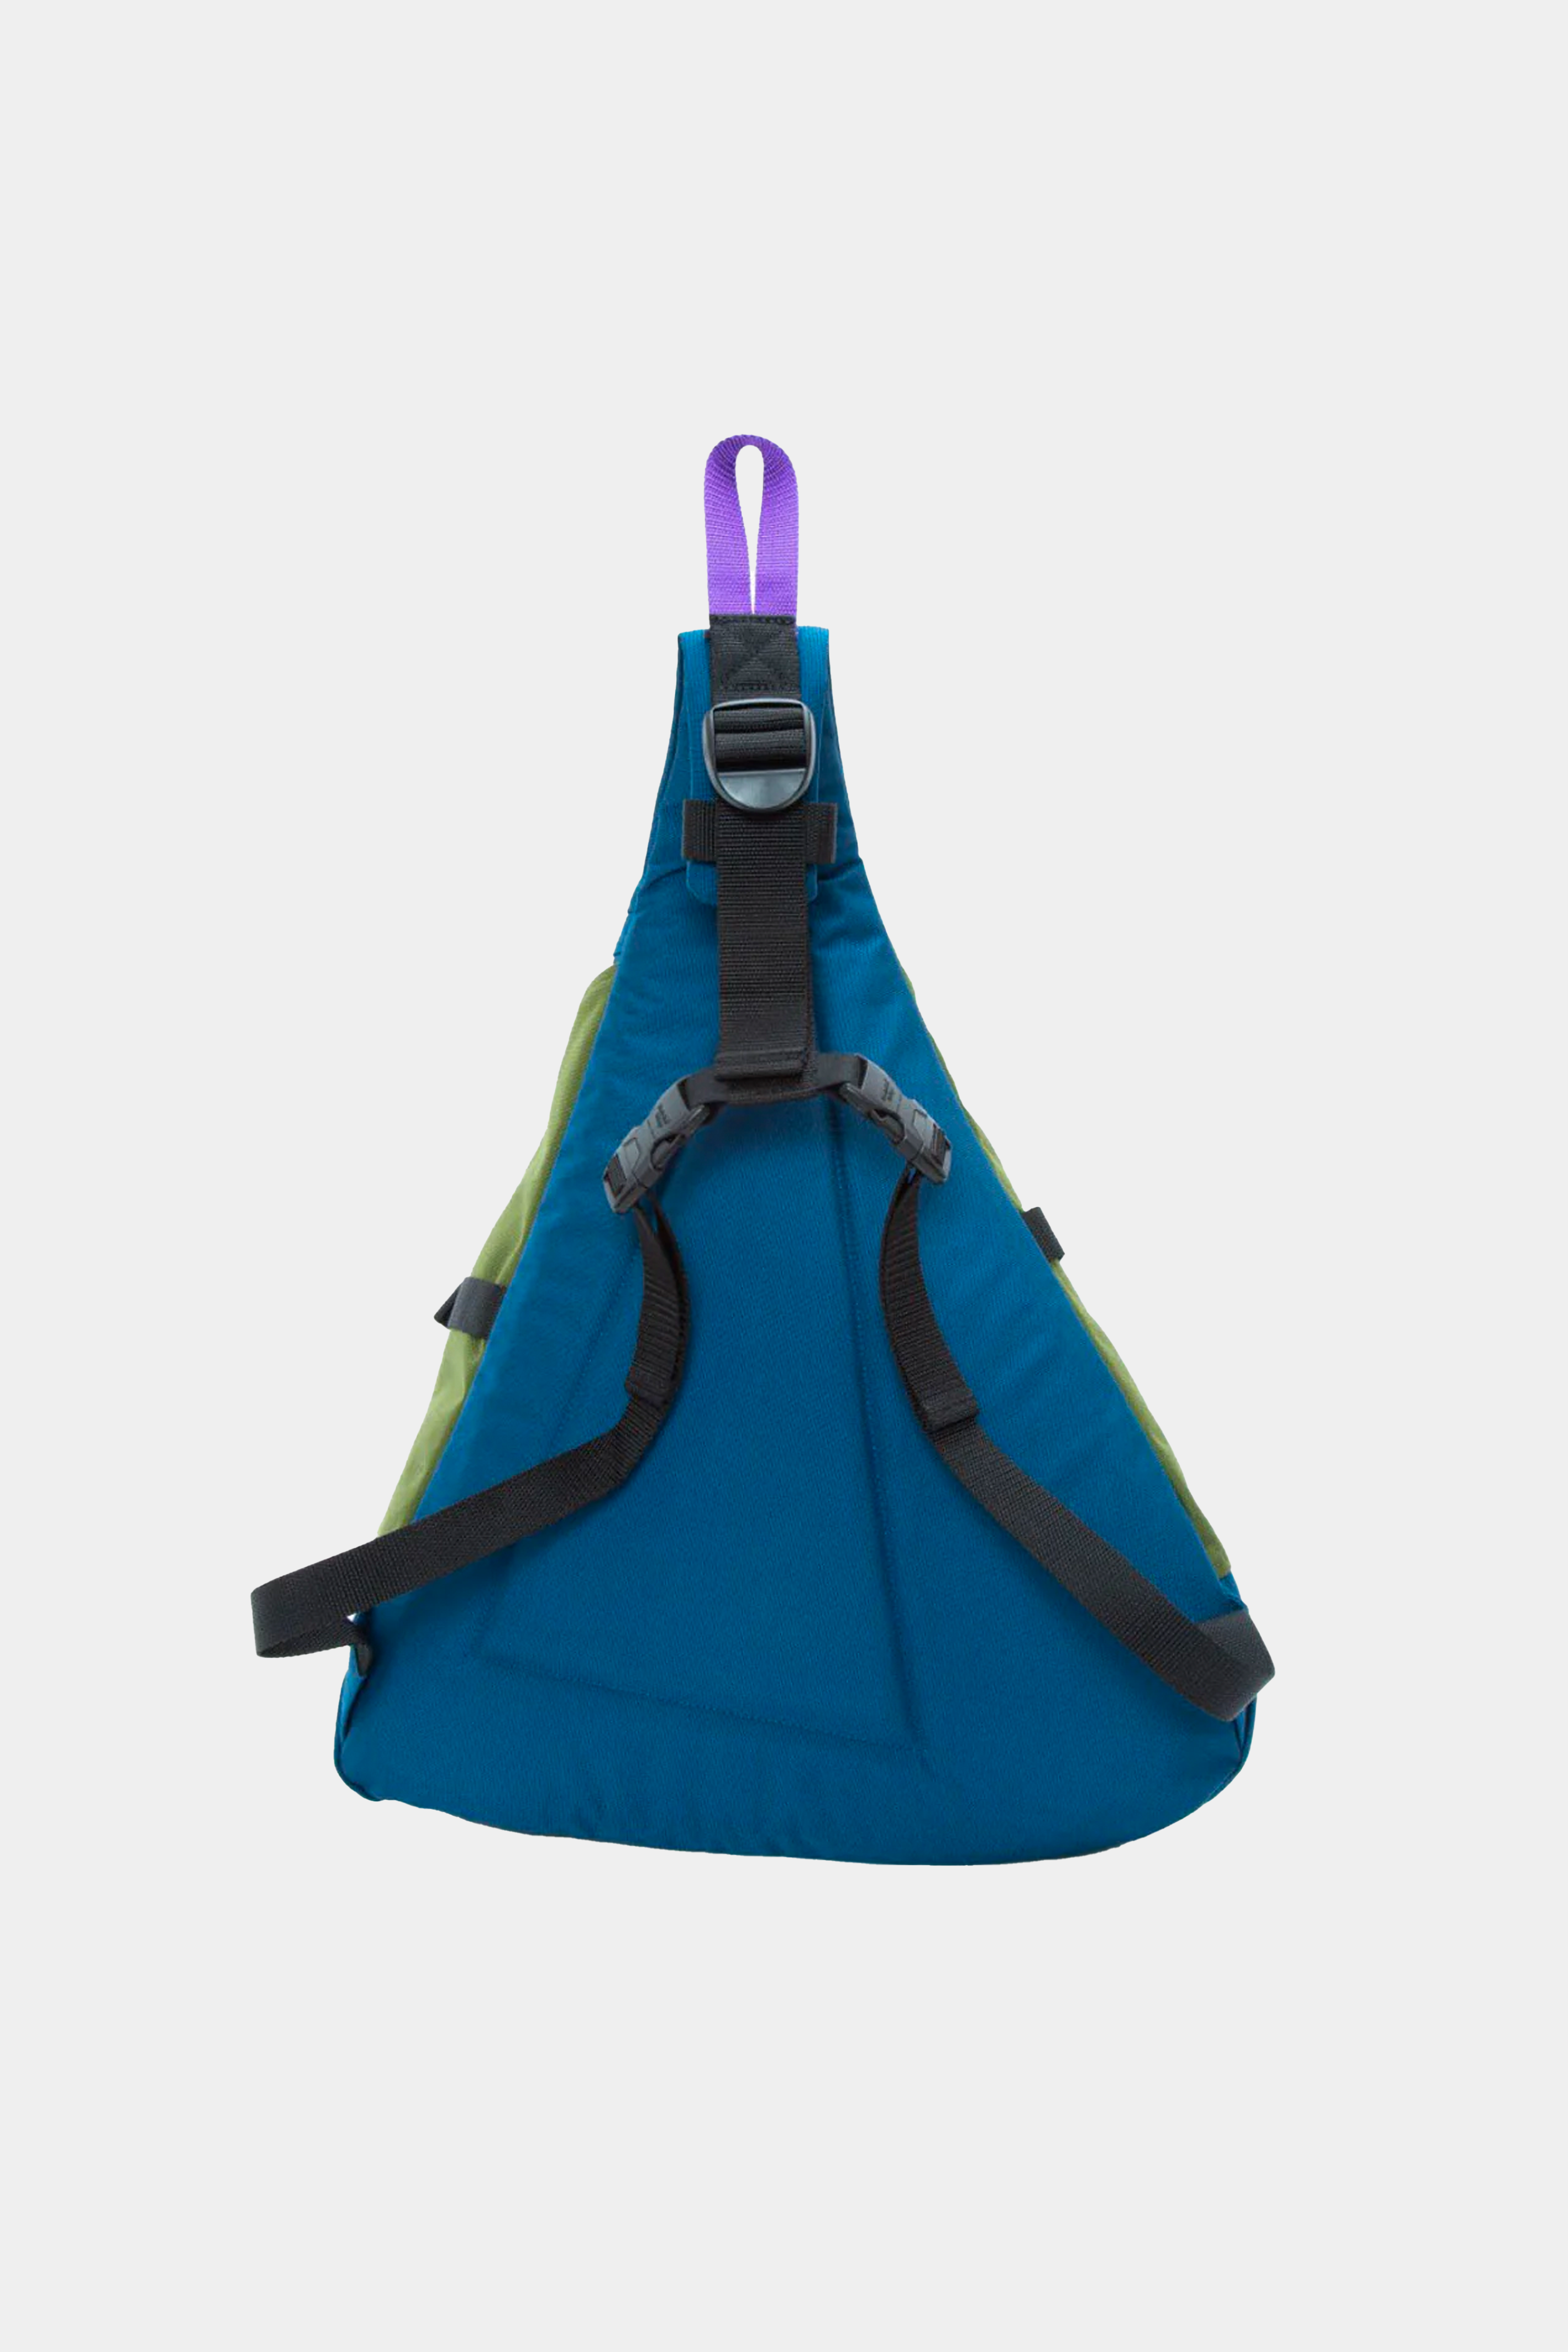 Selectshop FRAME - IGGY IGGY x Manhattan Portage - J-BAG Sling Backpack All-Accessories Concept Store Dubai